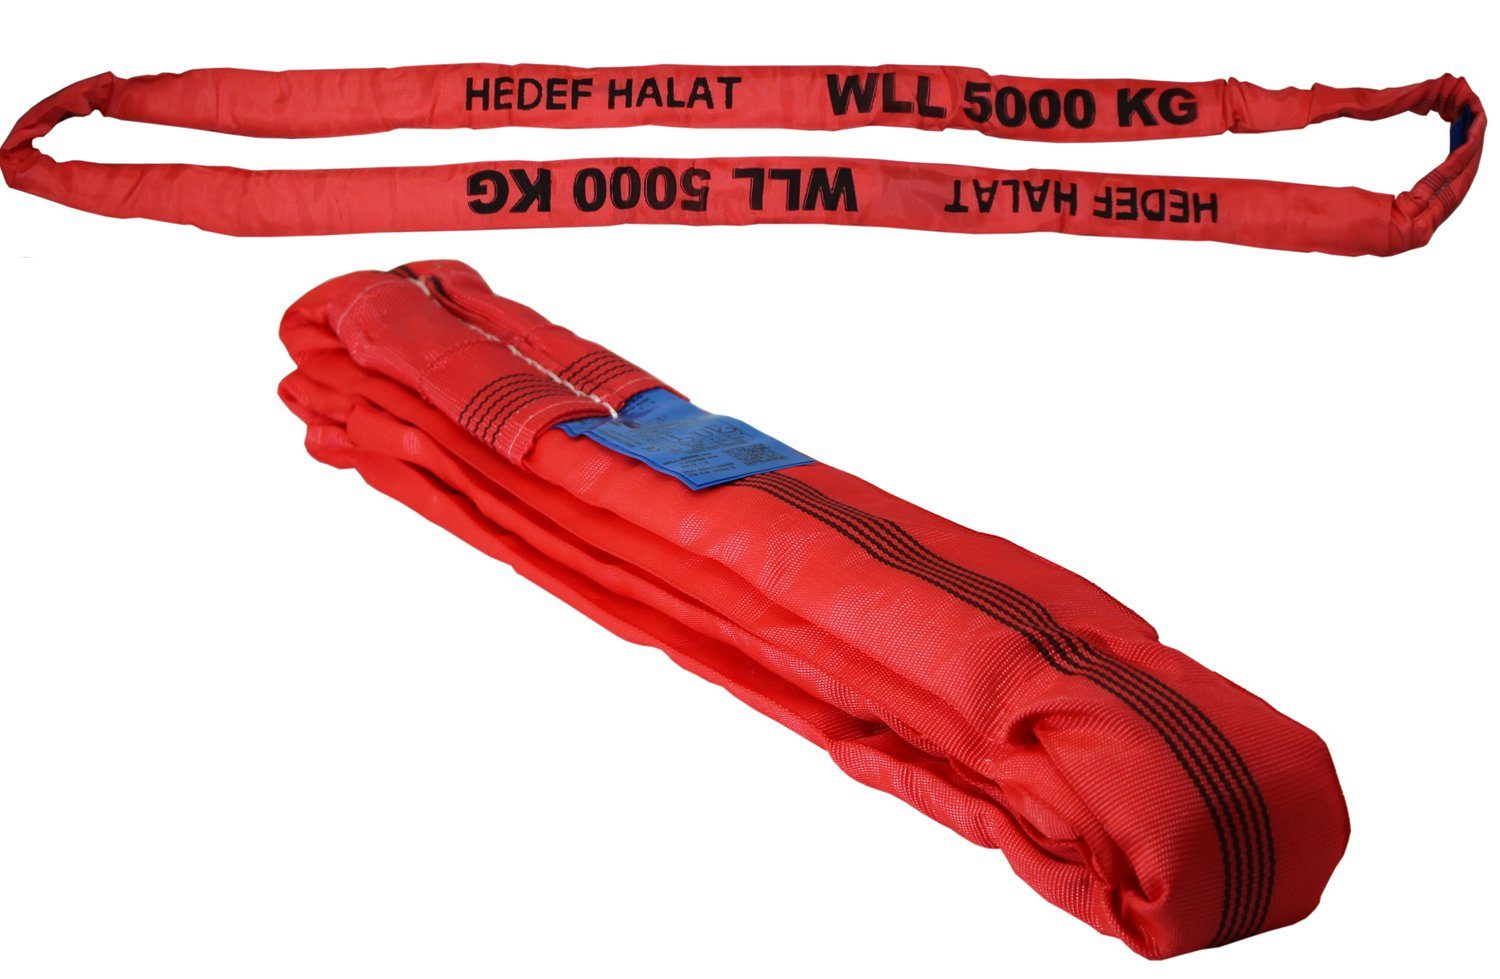 HEDEF HALAT Rundschlinge mit Einfachmantel 5 Tonnen 2.5 Meter SF: 7/1 DIN EN 1492- Hebeband, Rundschlingen Bandschlinge Hebegurt 2.5 m (umfang 5 m)